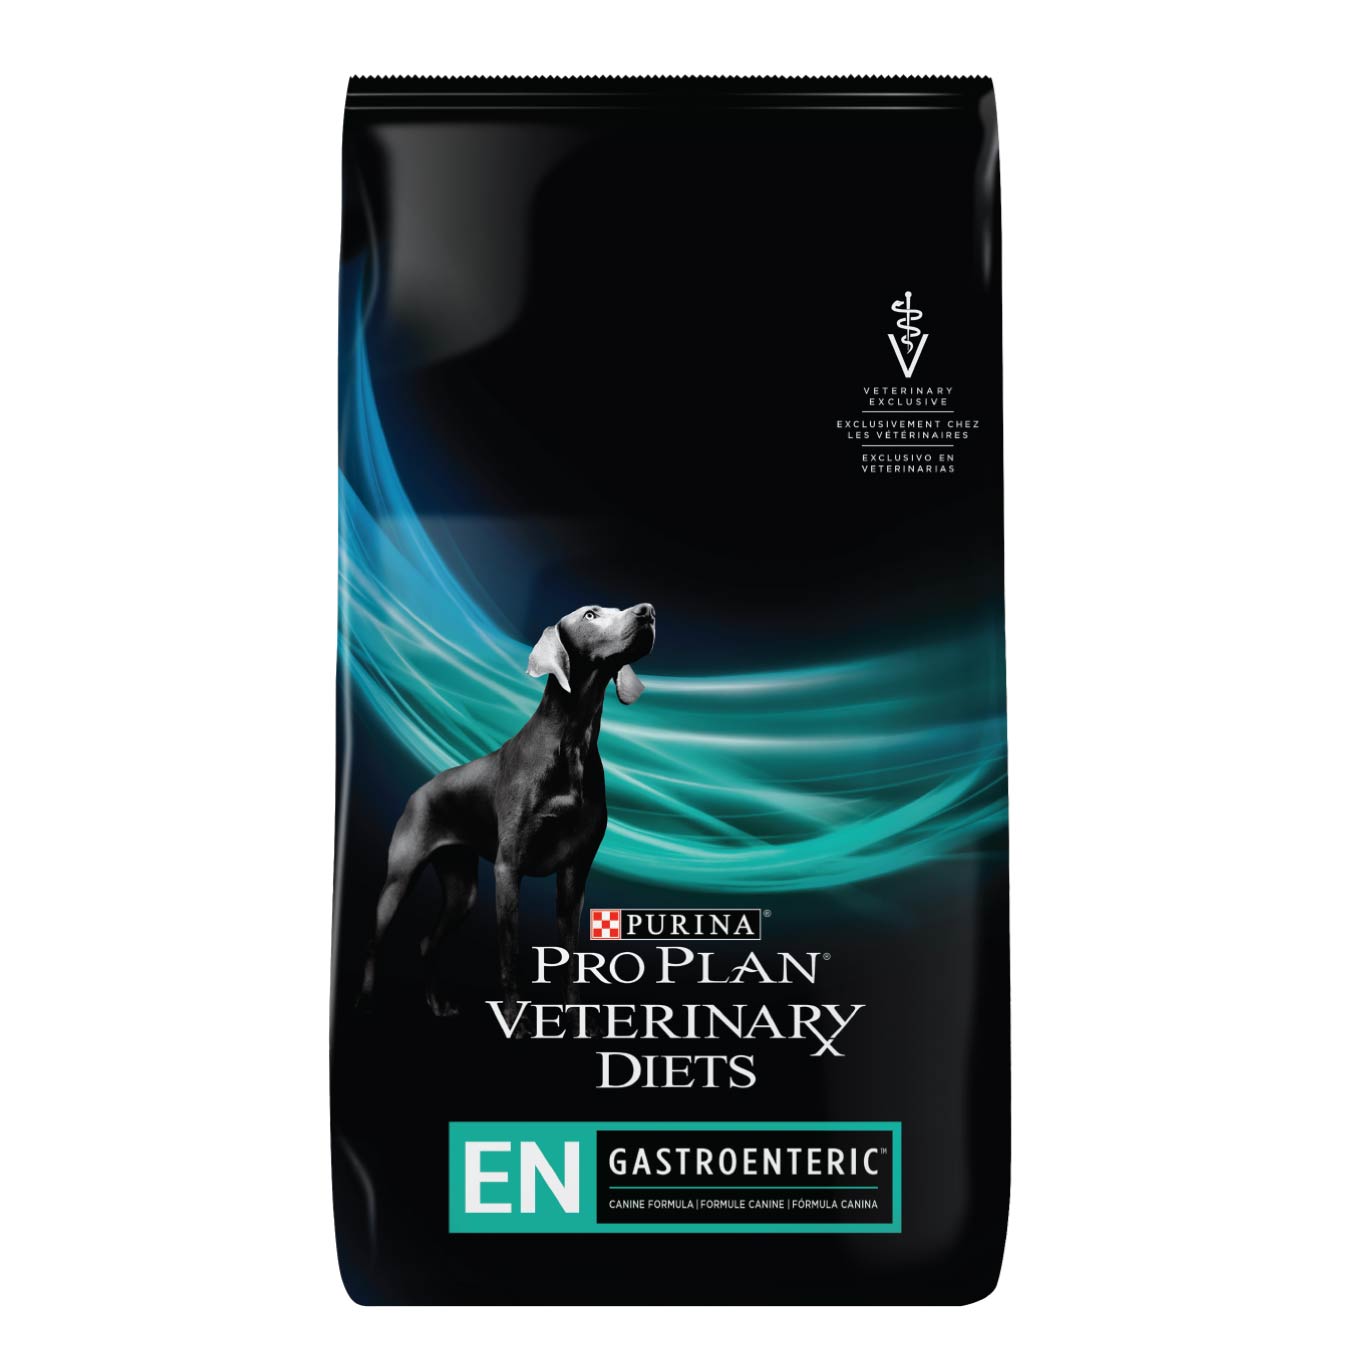 Pro Plan EN Gastroenteric Veterinary Diet - Alimento para Perro, perro, ProPlan, Mister Mascotas